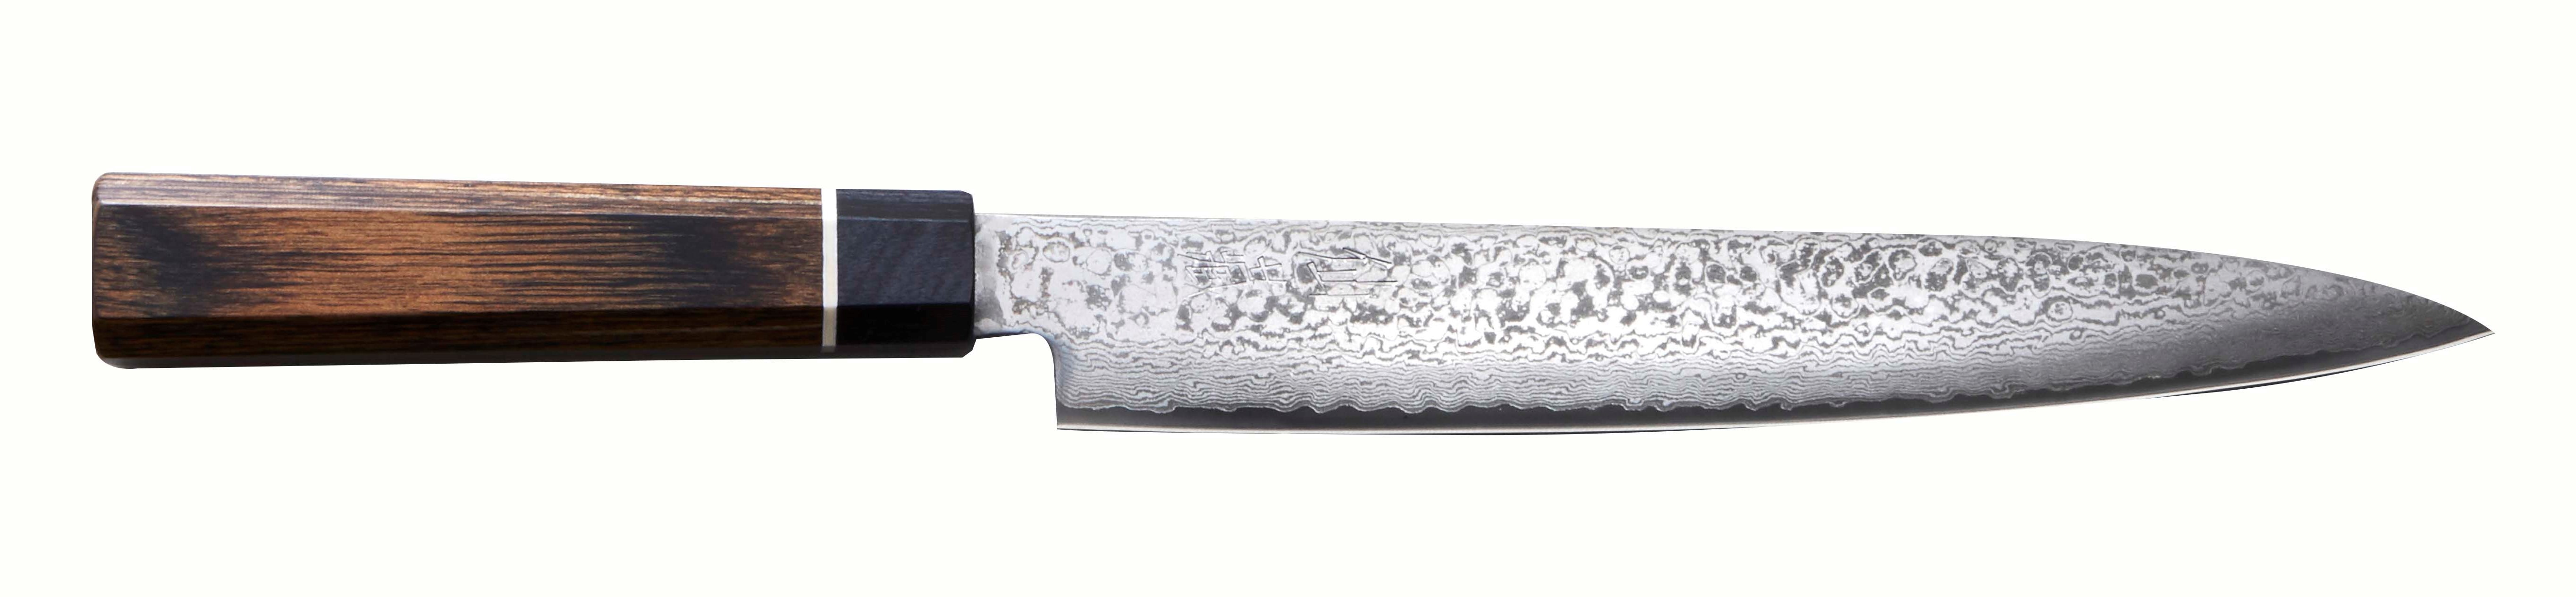 Cuchillo japonés yanagiba PARA ZURDOS KAI Seki Magoroku Hekiju 21 cm -  Ganivetería Roca